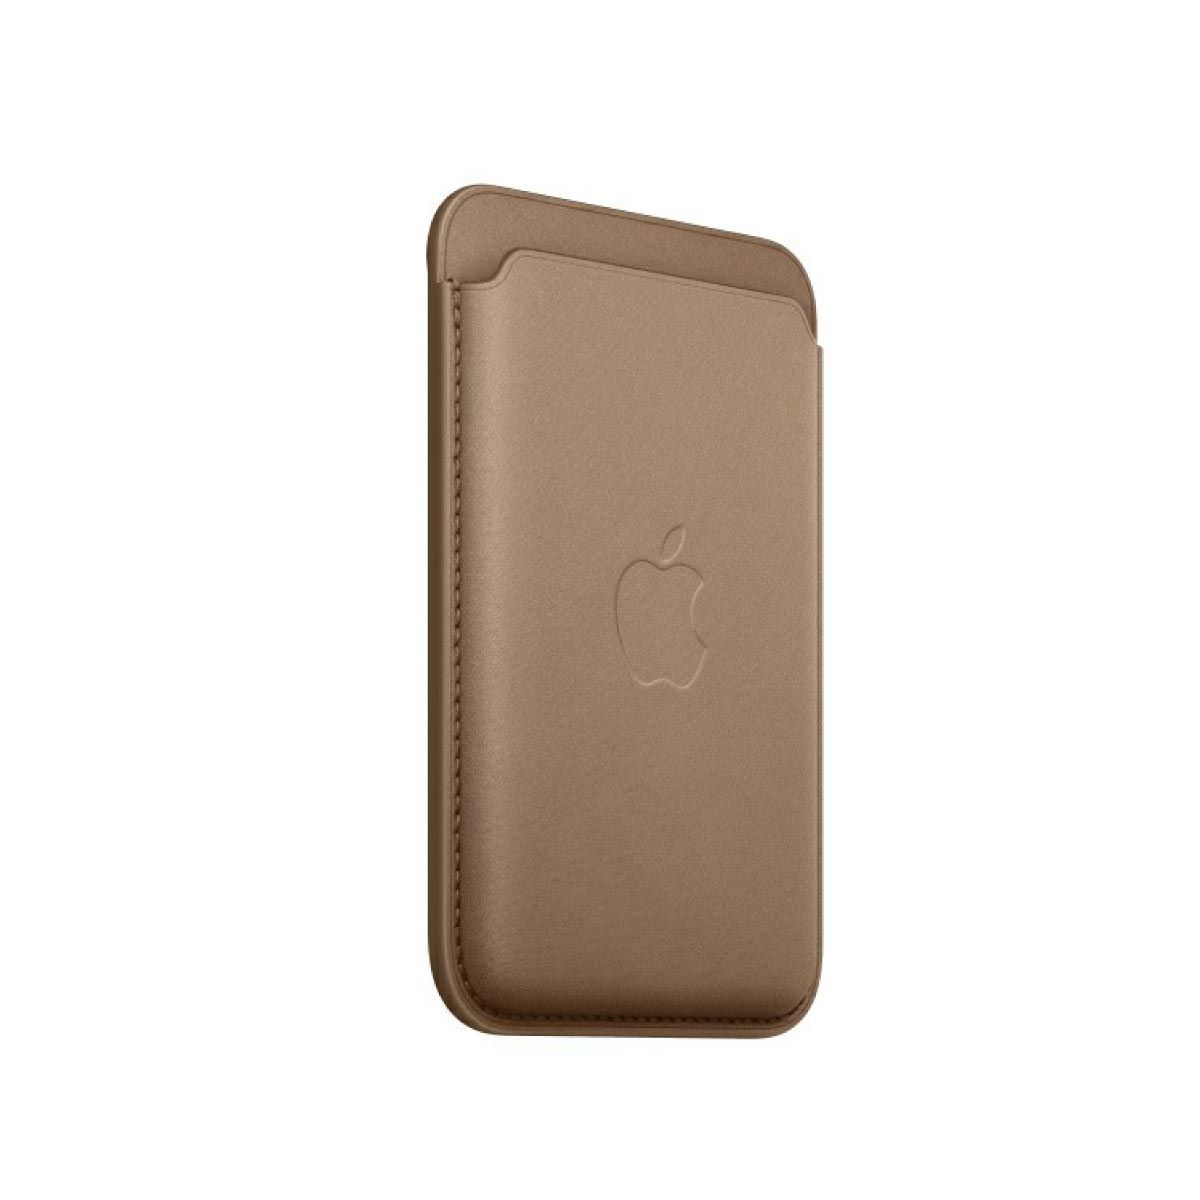 Apple Case เคสผ้า FineWoven แบบกระเป๋าสตางค์สำหรับ iPhone พร้อม MagSafe  - สีน้ำตาลอมเทา